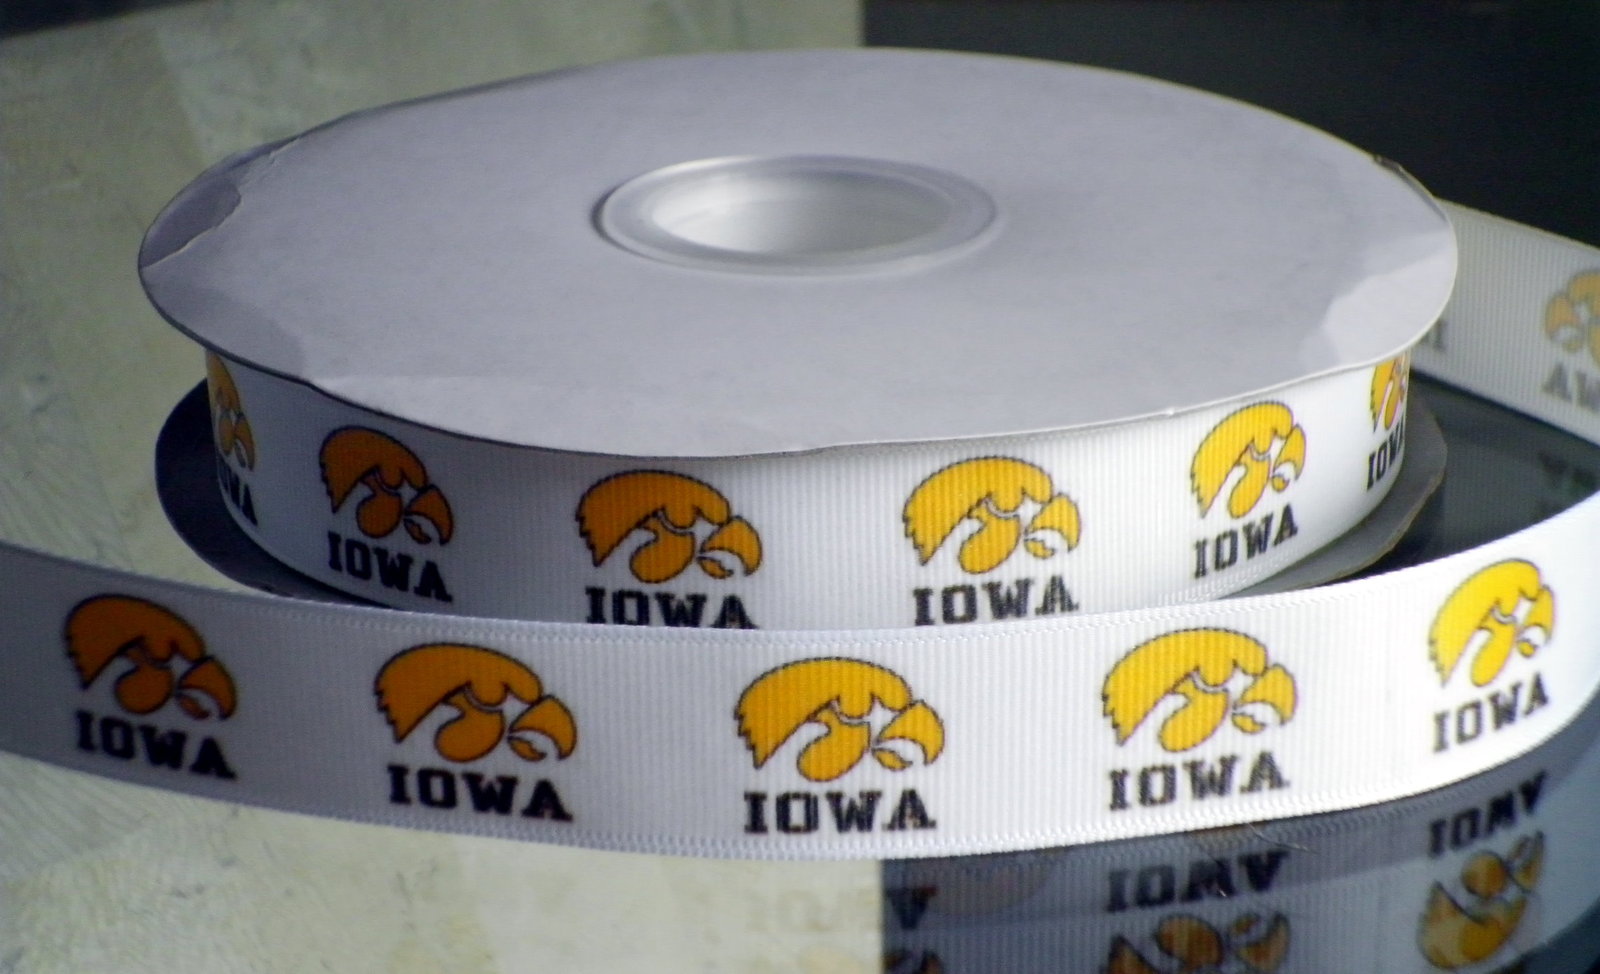 Iowa University Inspired Grosgrain Ribbon